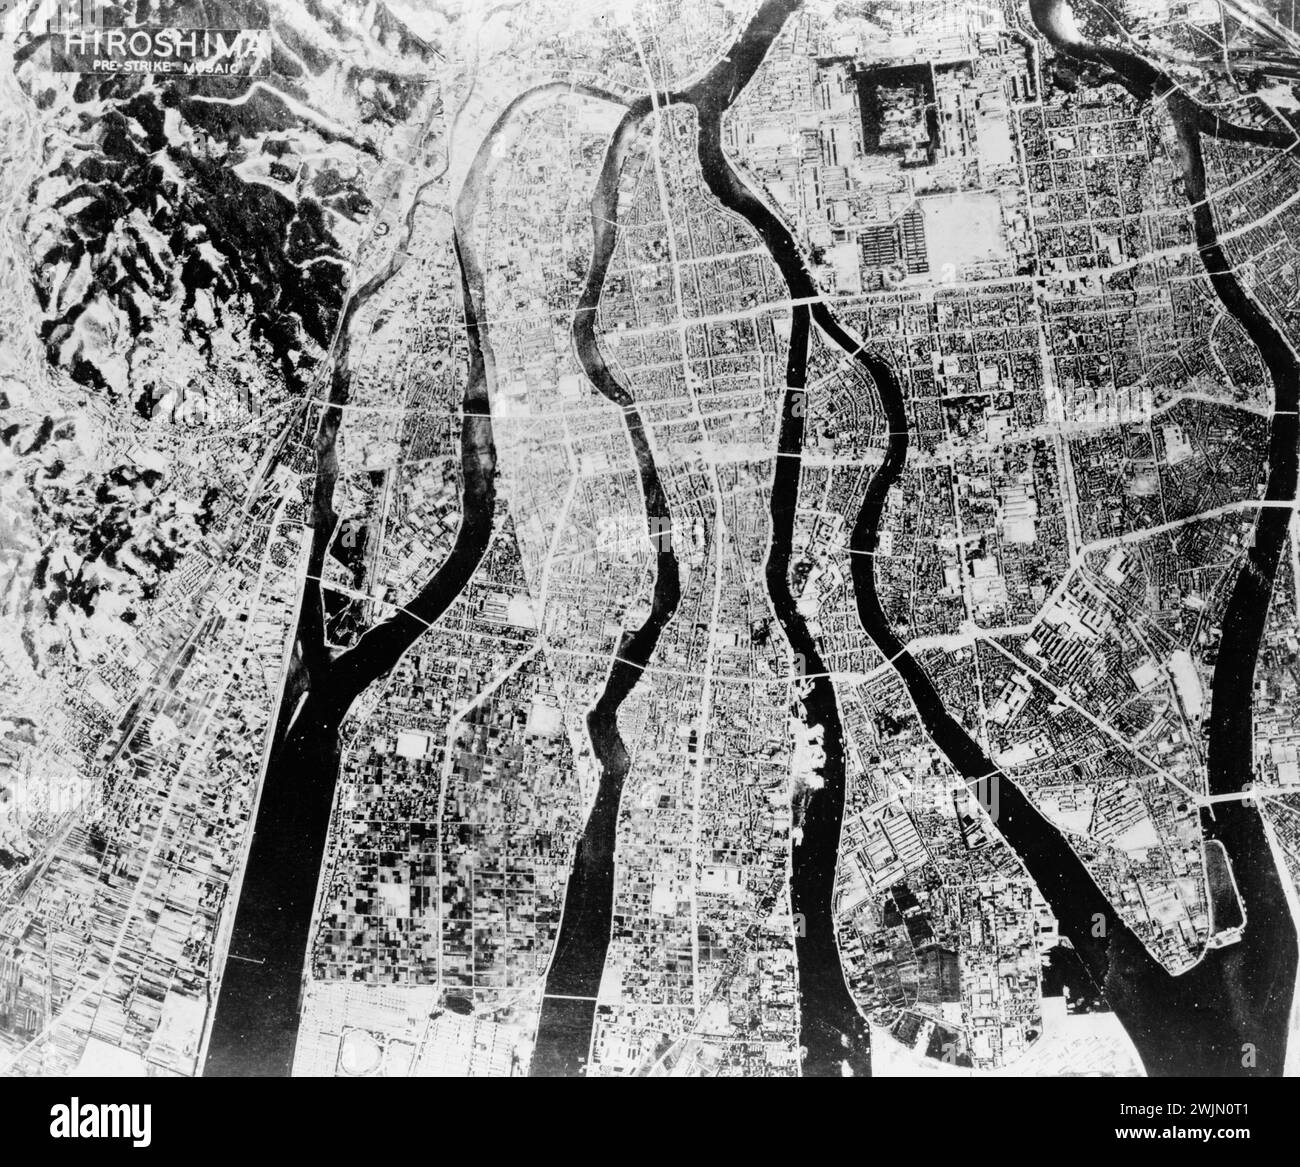 Pre-strike aerial view of Hiroshima - before aug 6, 1945 Pre-strike aerial view of Hiroshima - before aug 6, 1945 Stock Photo